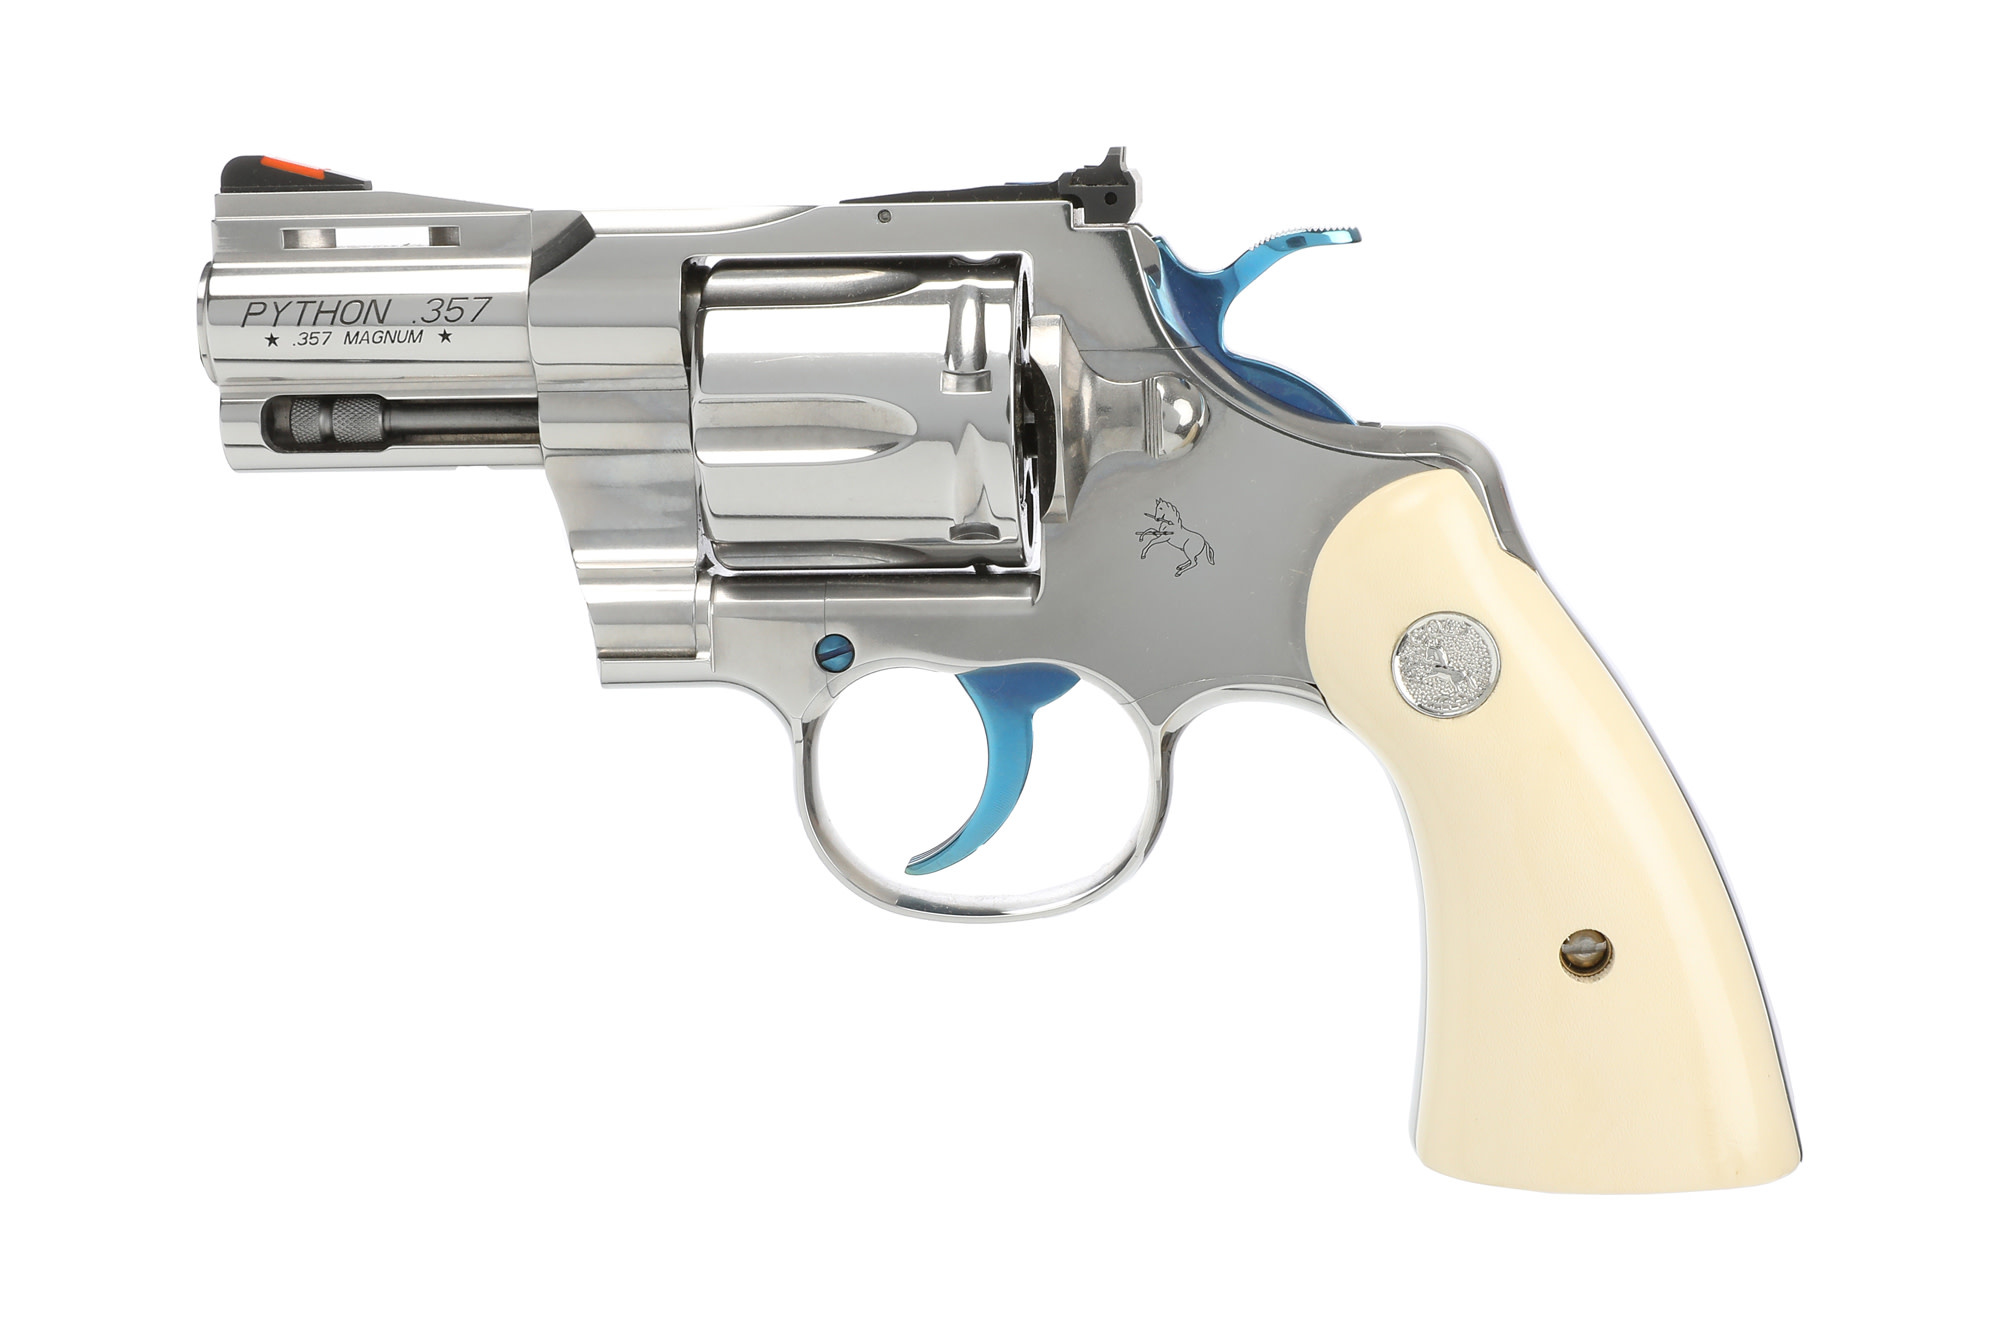 Colt Python 357MAG/38SPL  2.5" SS/ Holly Grips 6RND Revolver